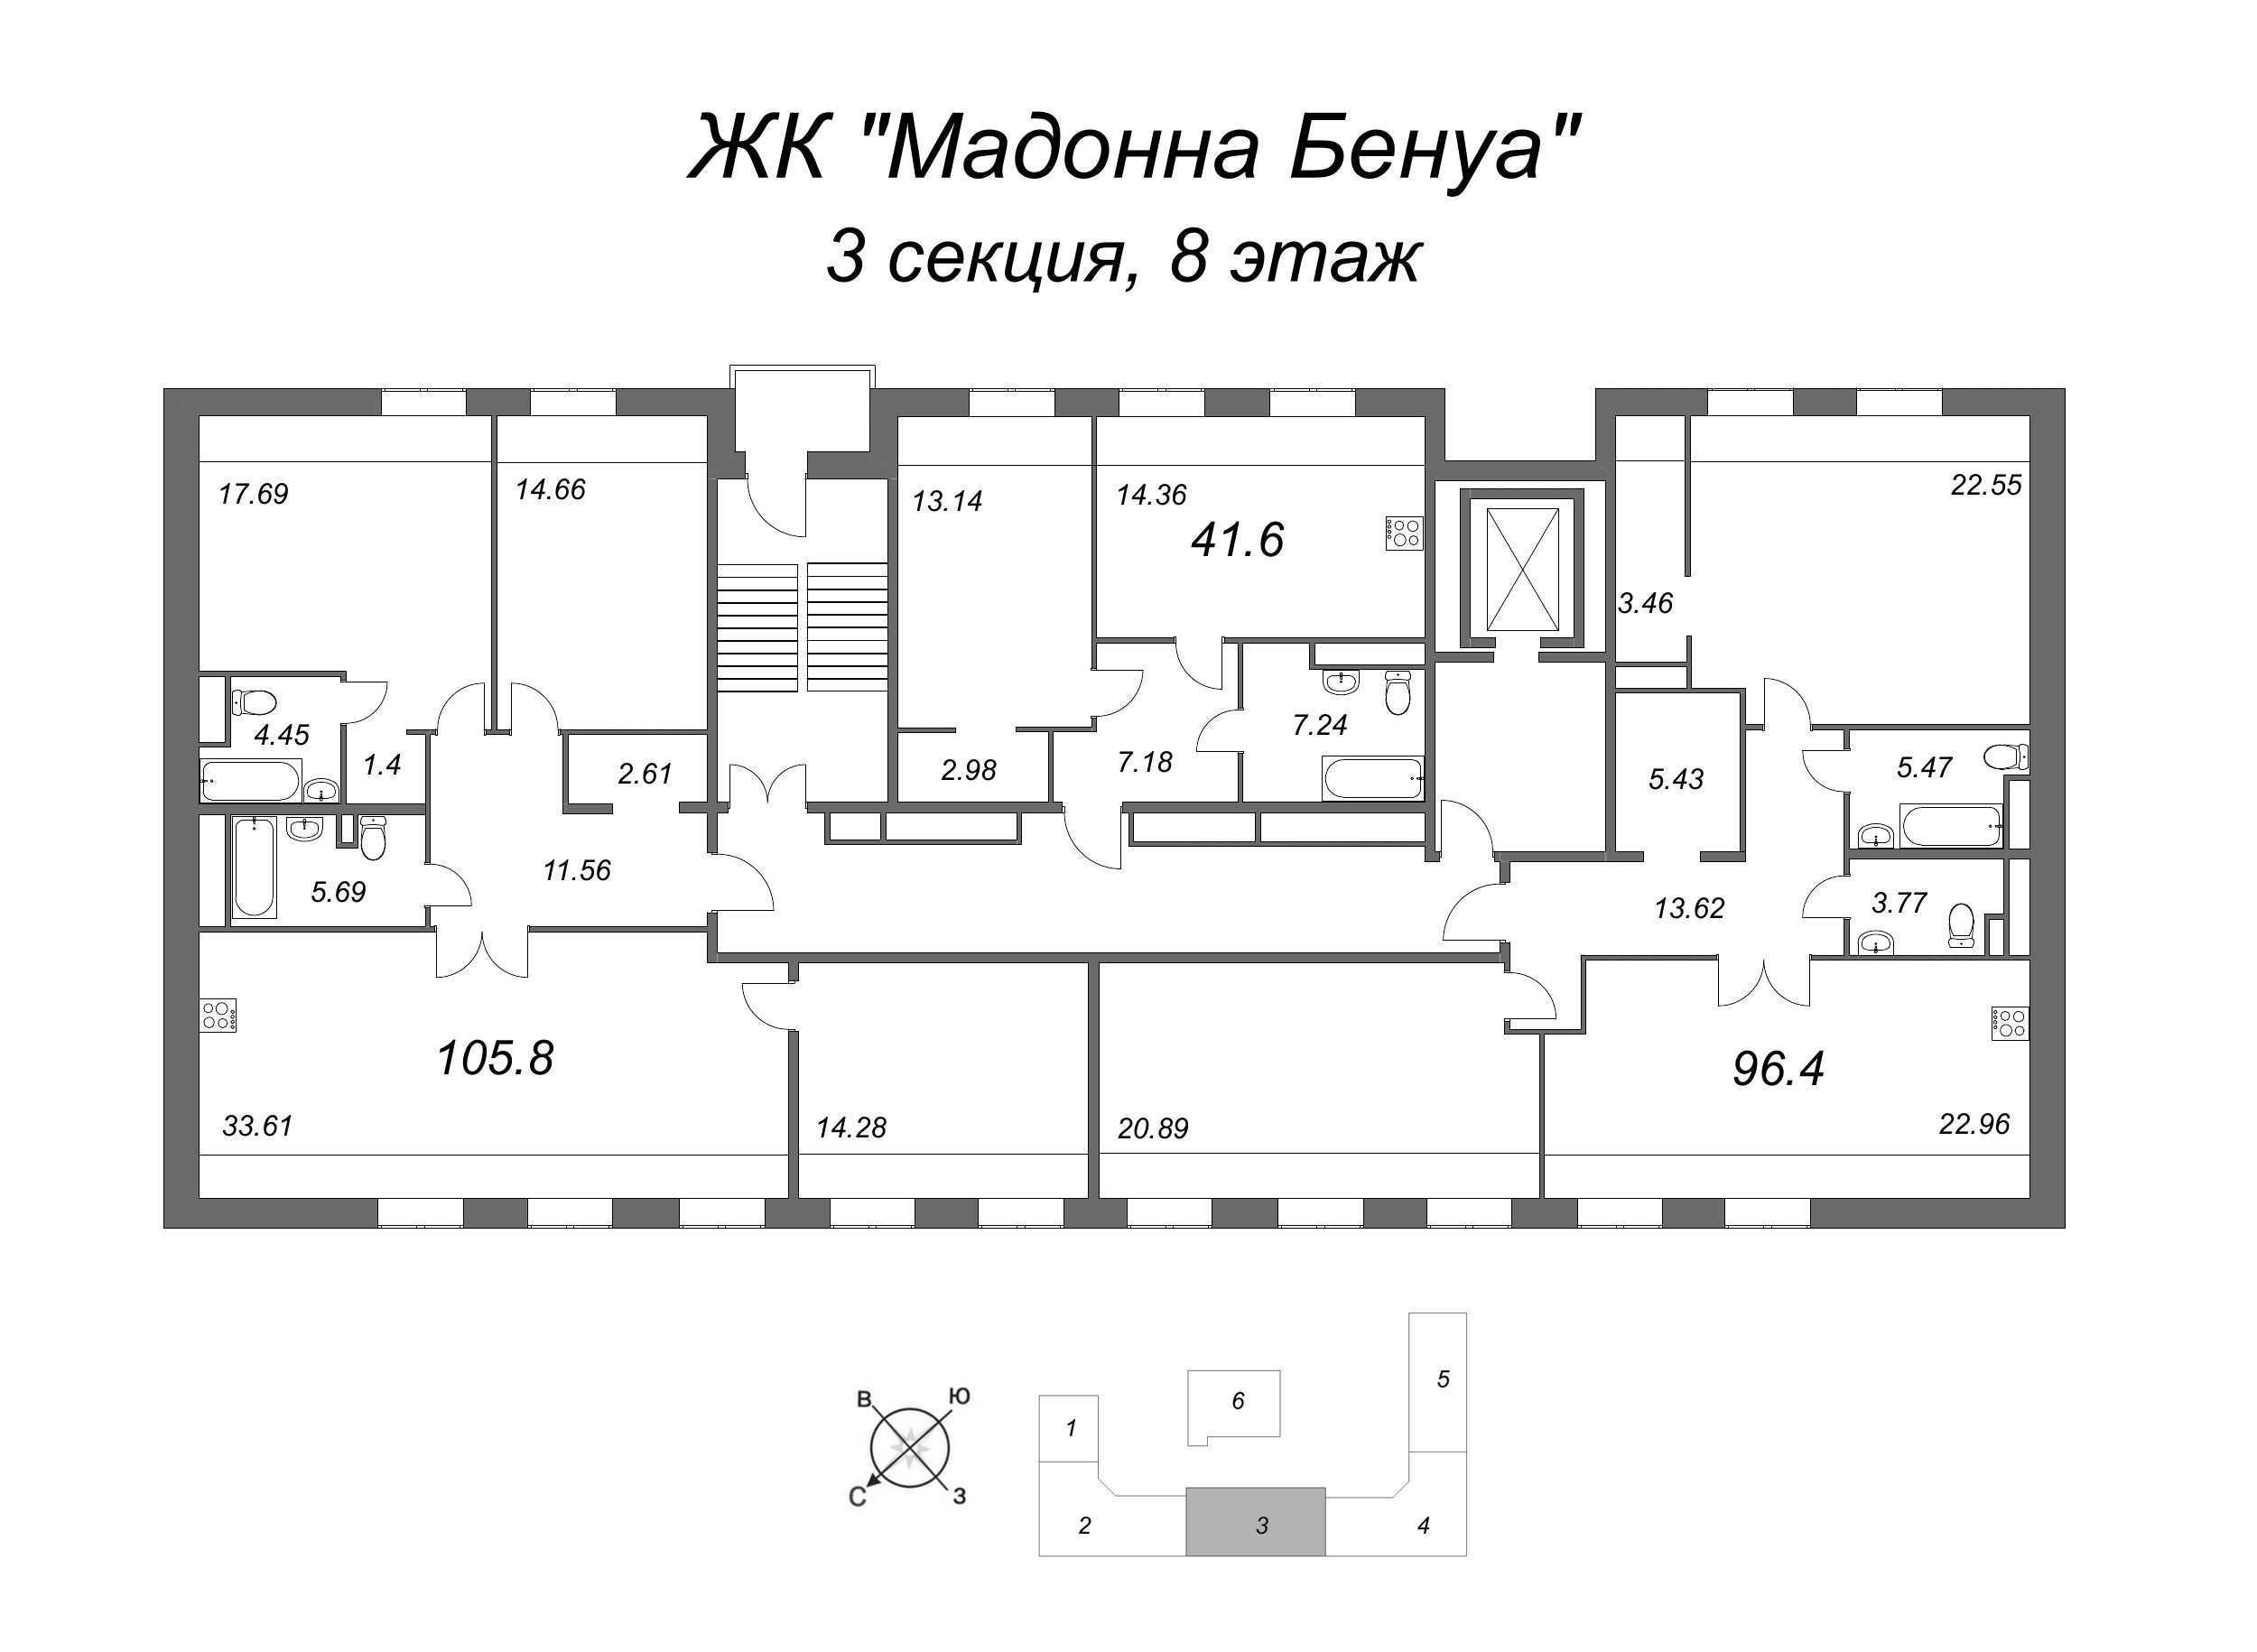 3-комнатная (Евро) квартира, 104.9 м² в ЖК "Мадонна Бенуа" - планировка этажа